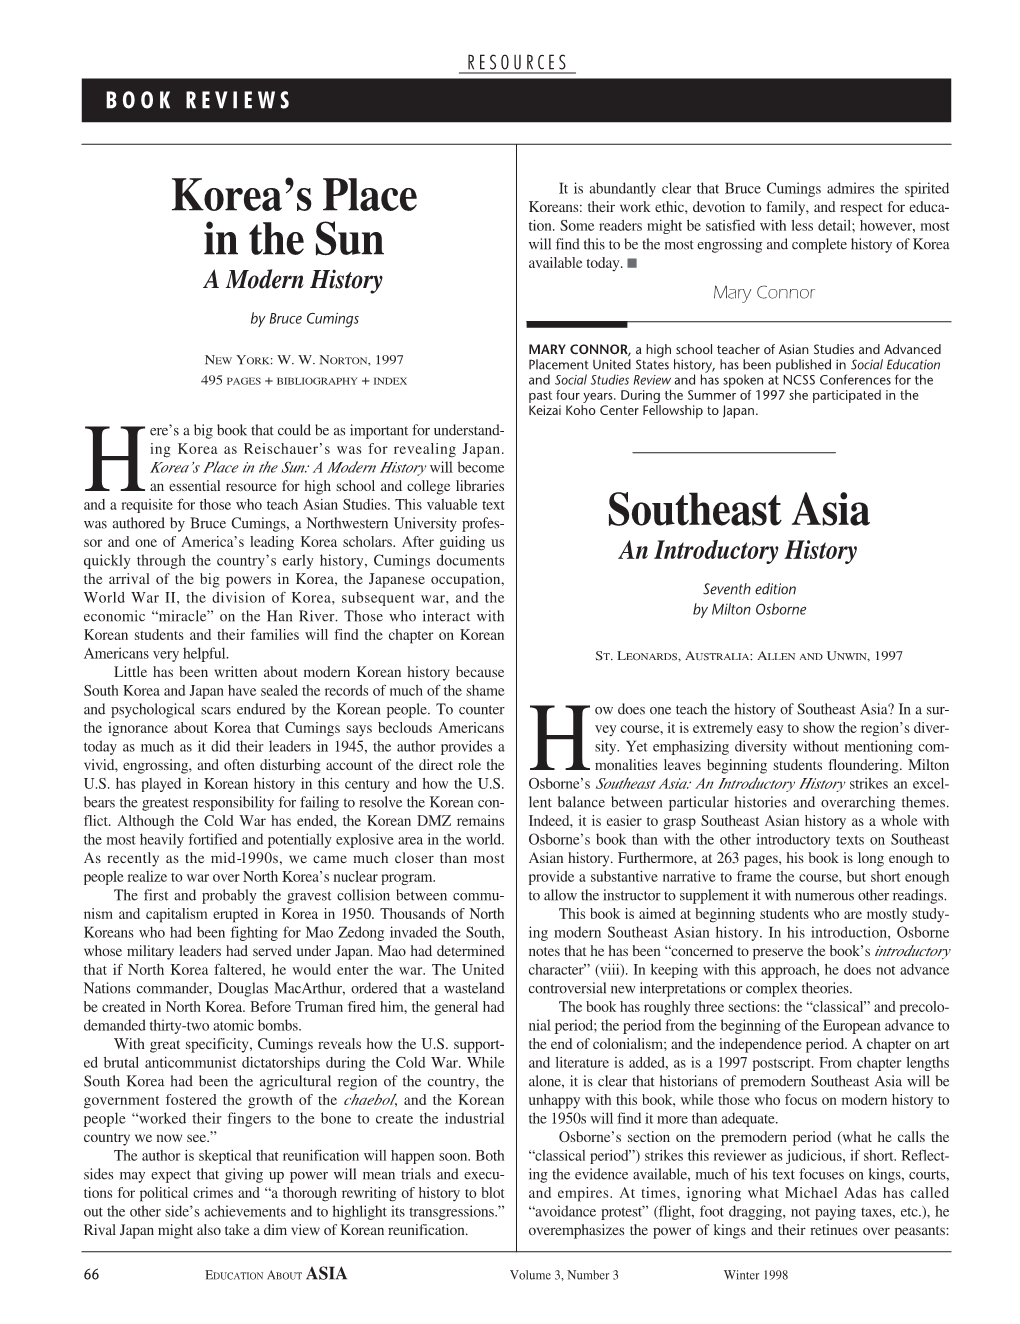 Southeast Asia Sor and One of America’S Leading Korea Scholars